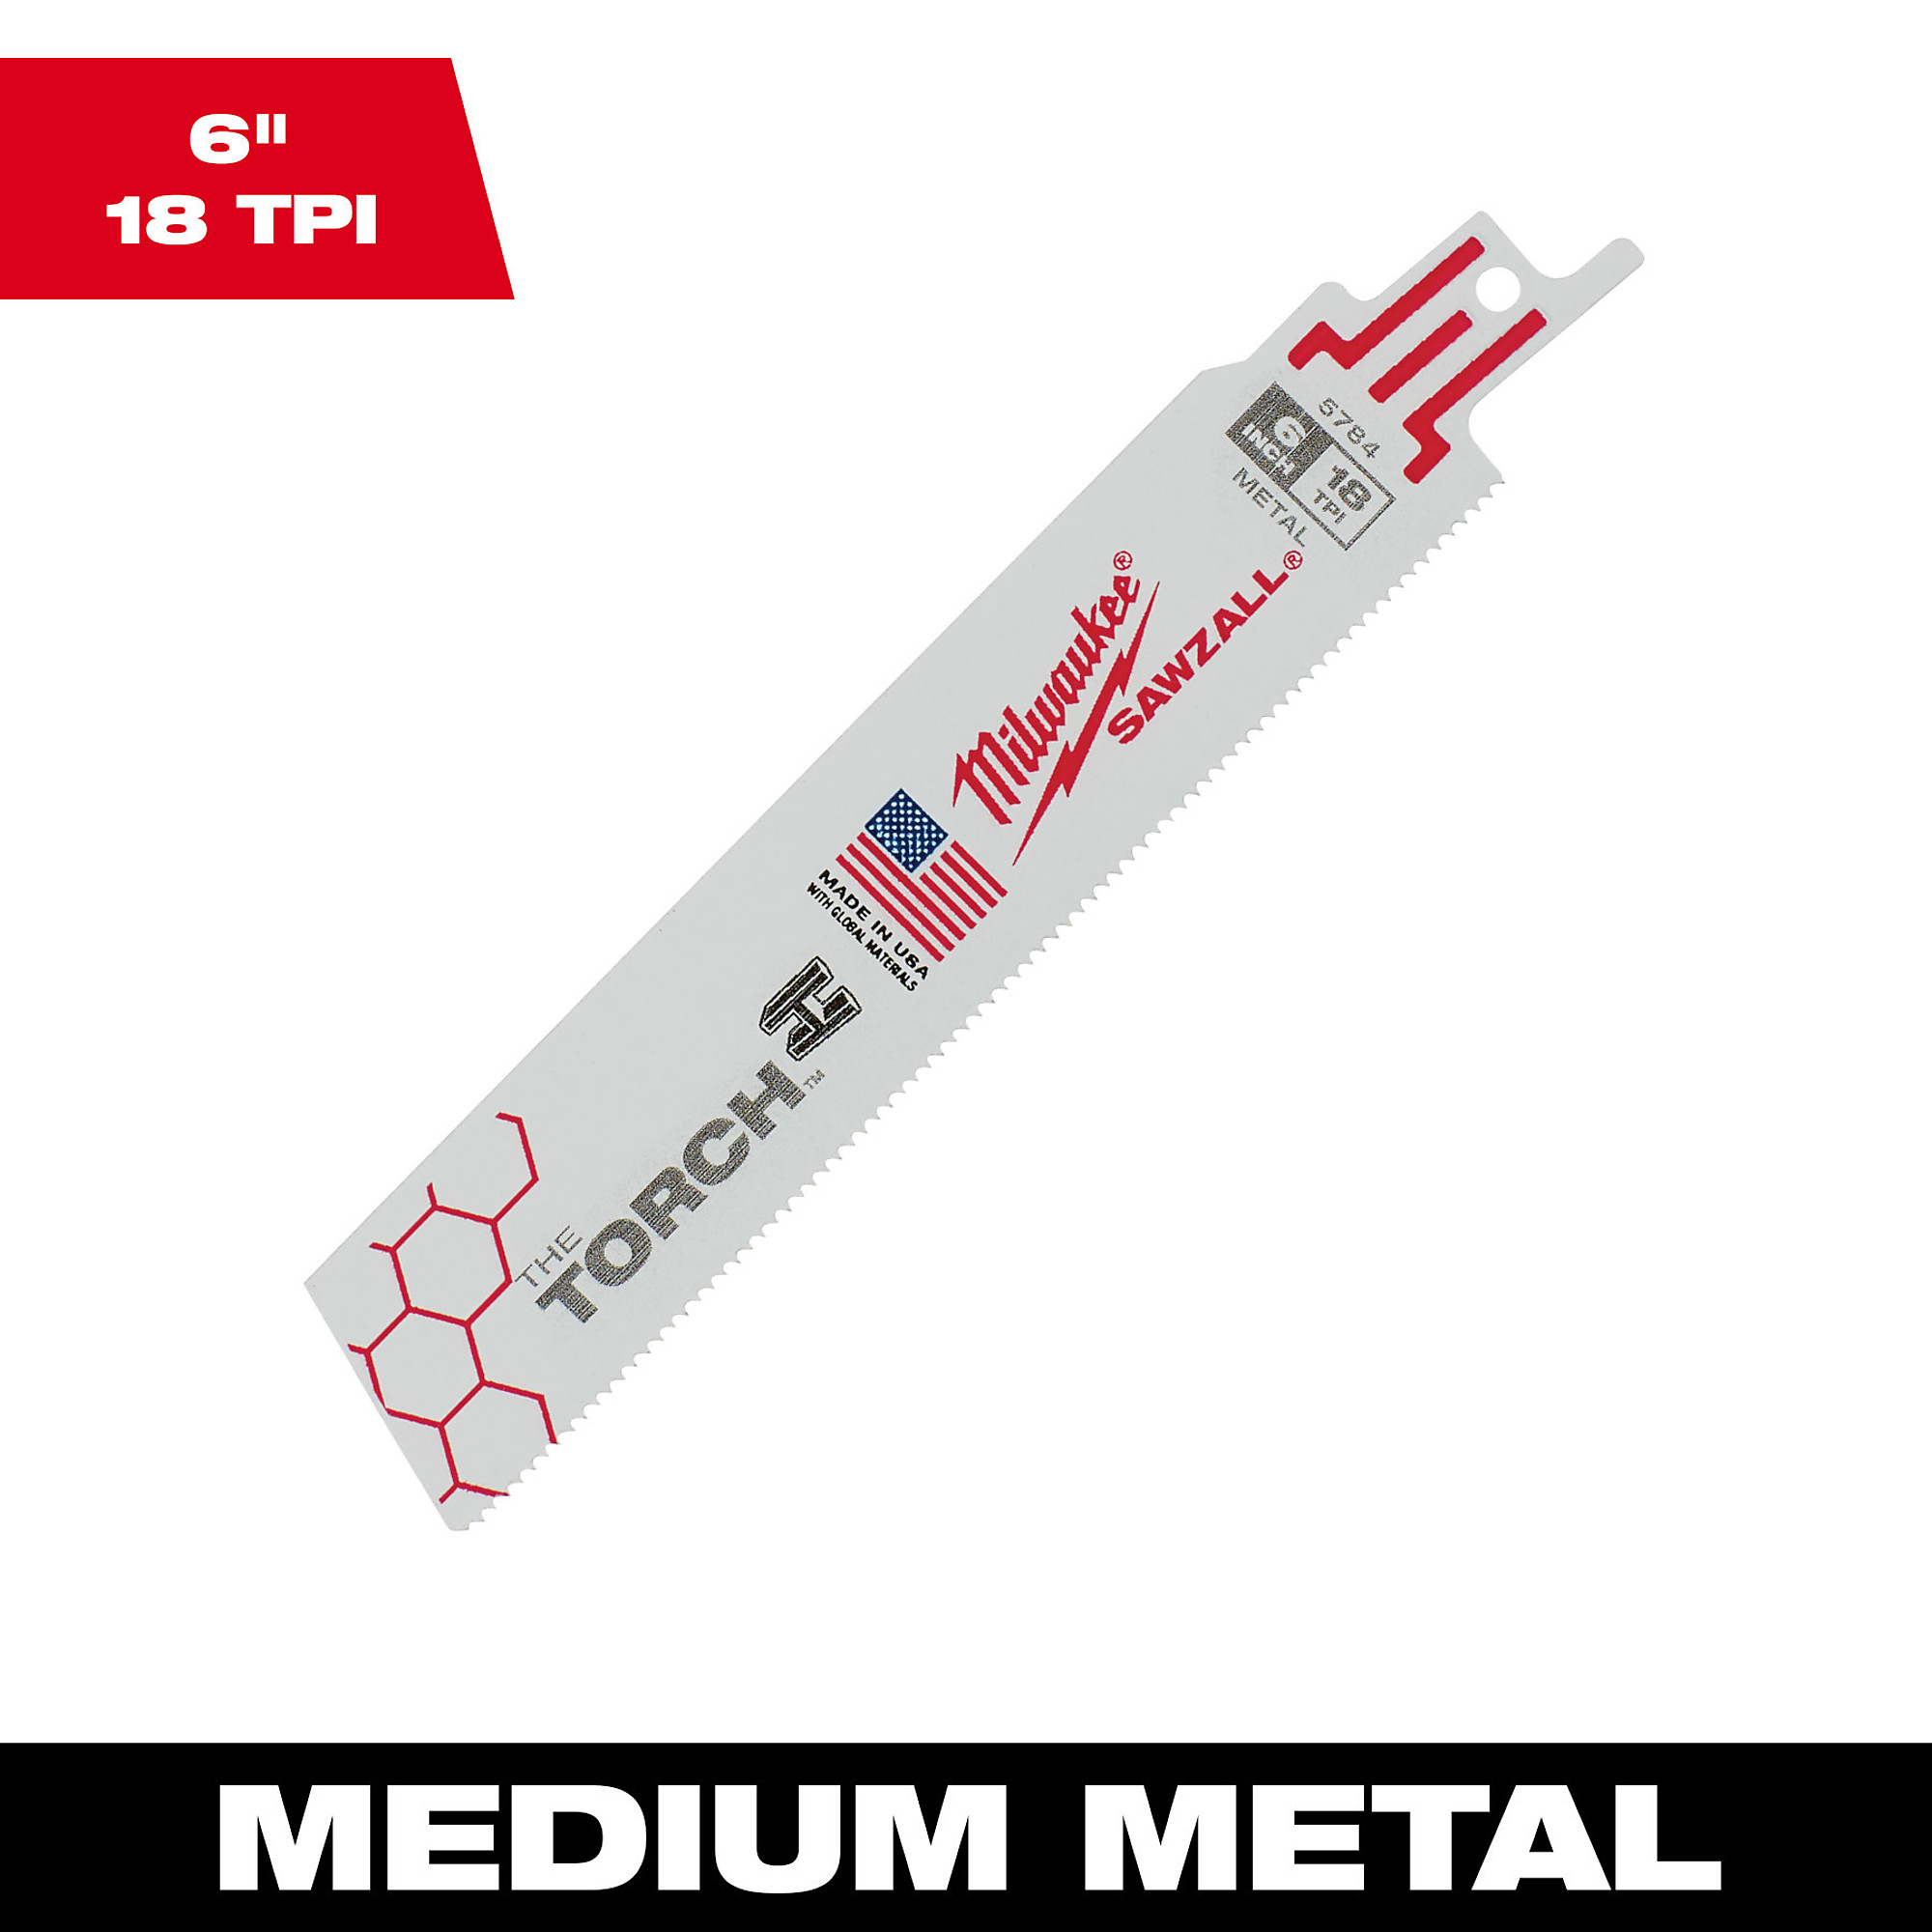 Milwaukee Torch Sawzall Metal Cutting Blade, 6in.L, 18 TPI, Model